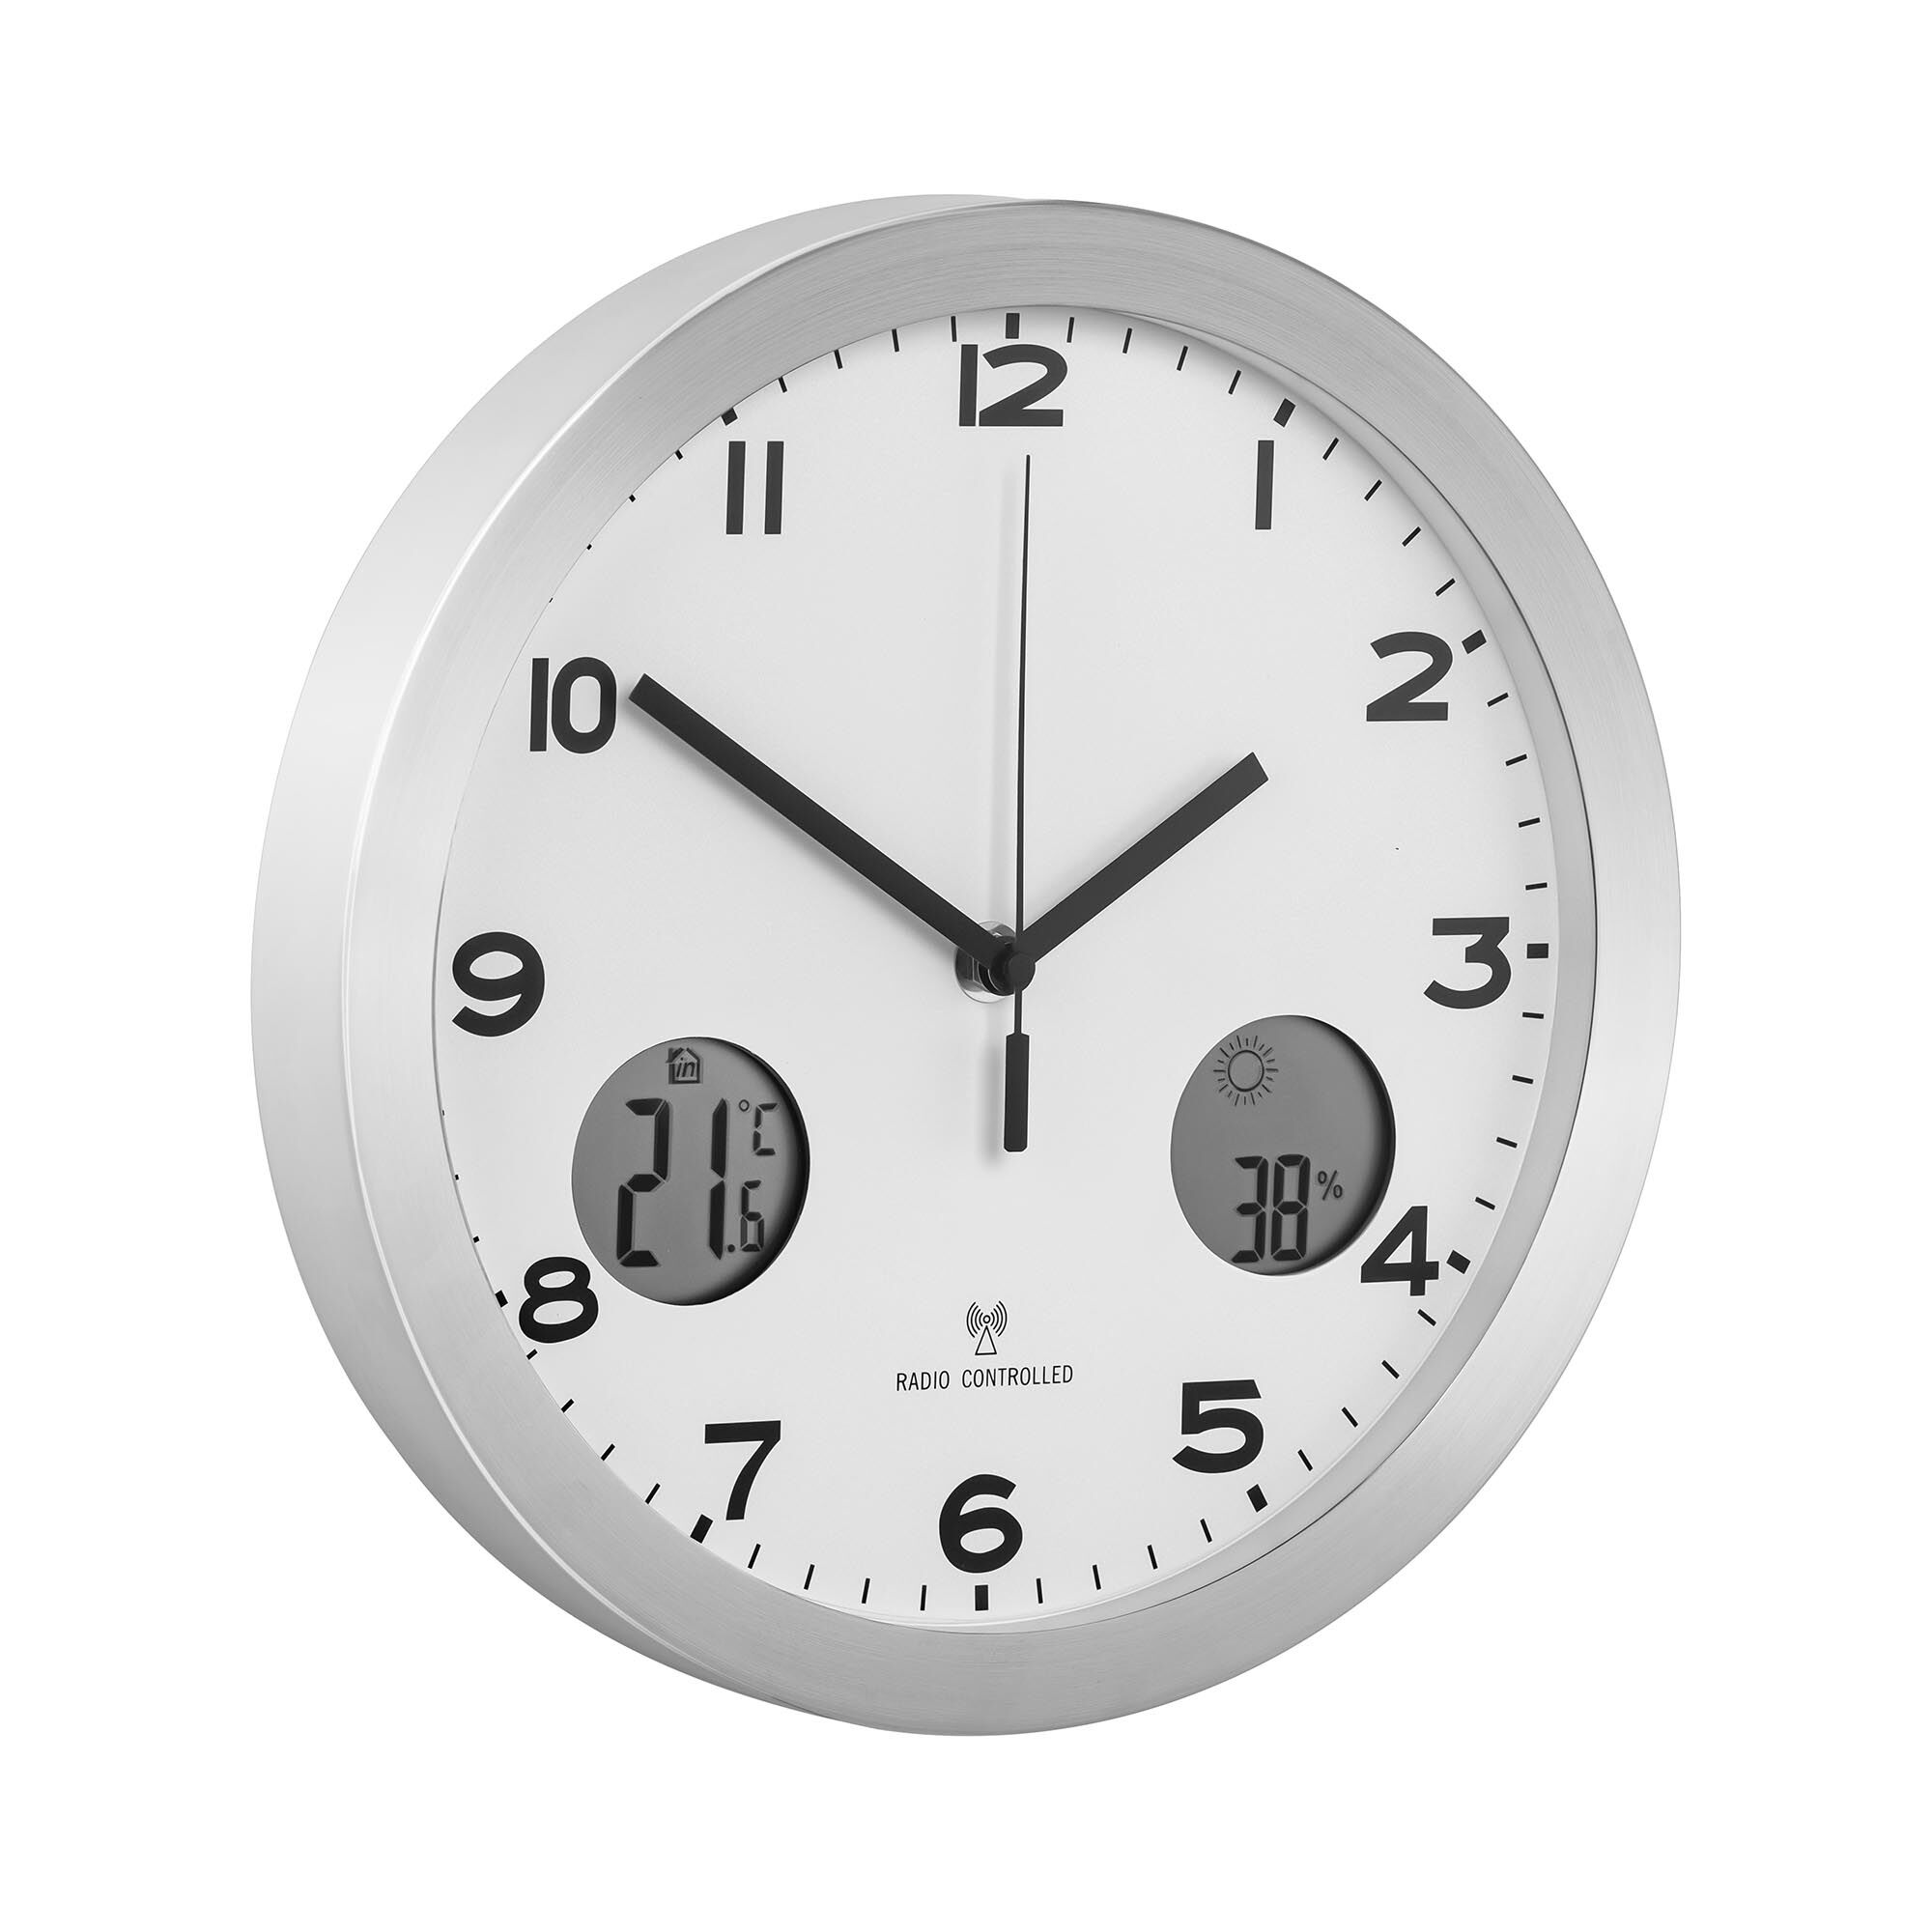 Uniprodo Wall Clock - radio - Ø 30 cm - thermometer - hygrometer